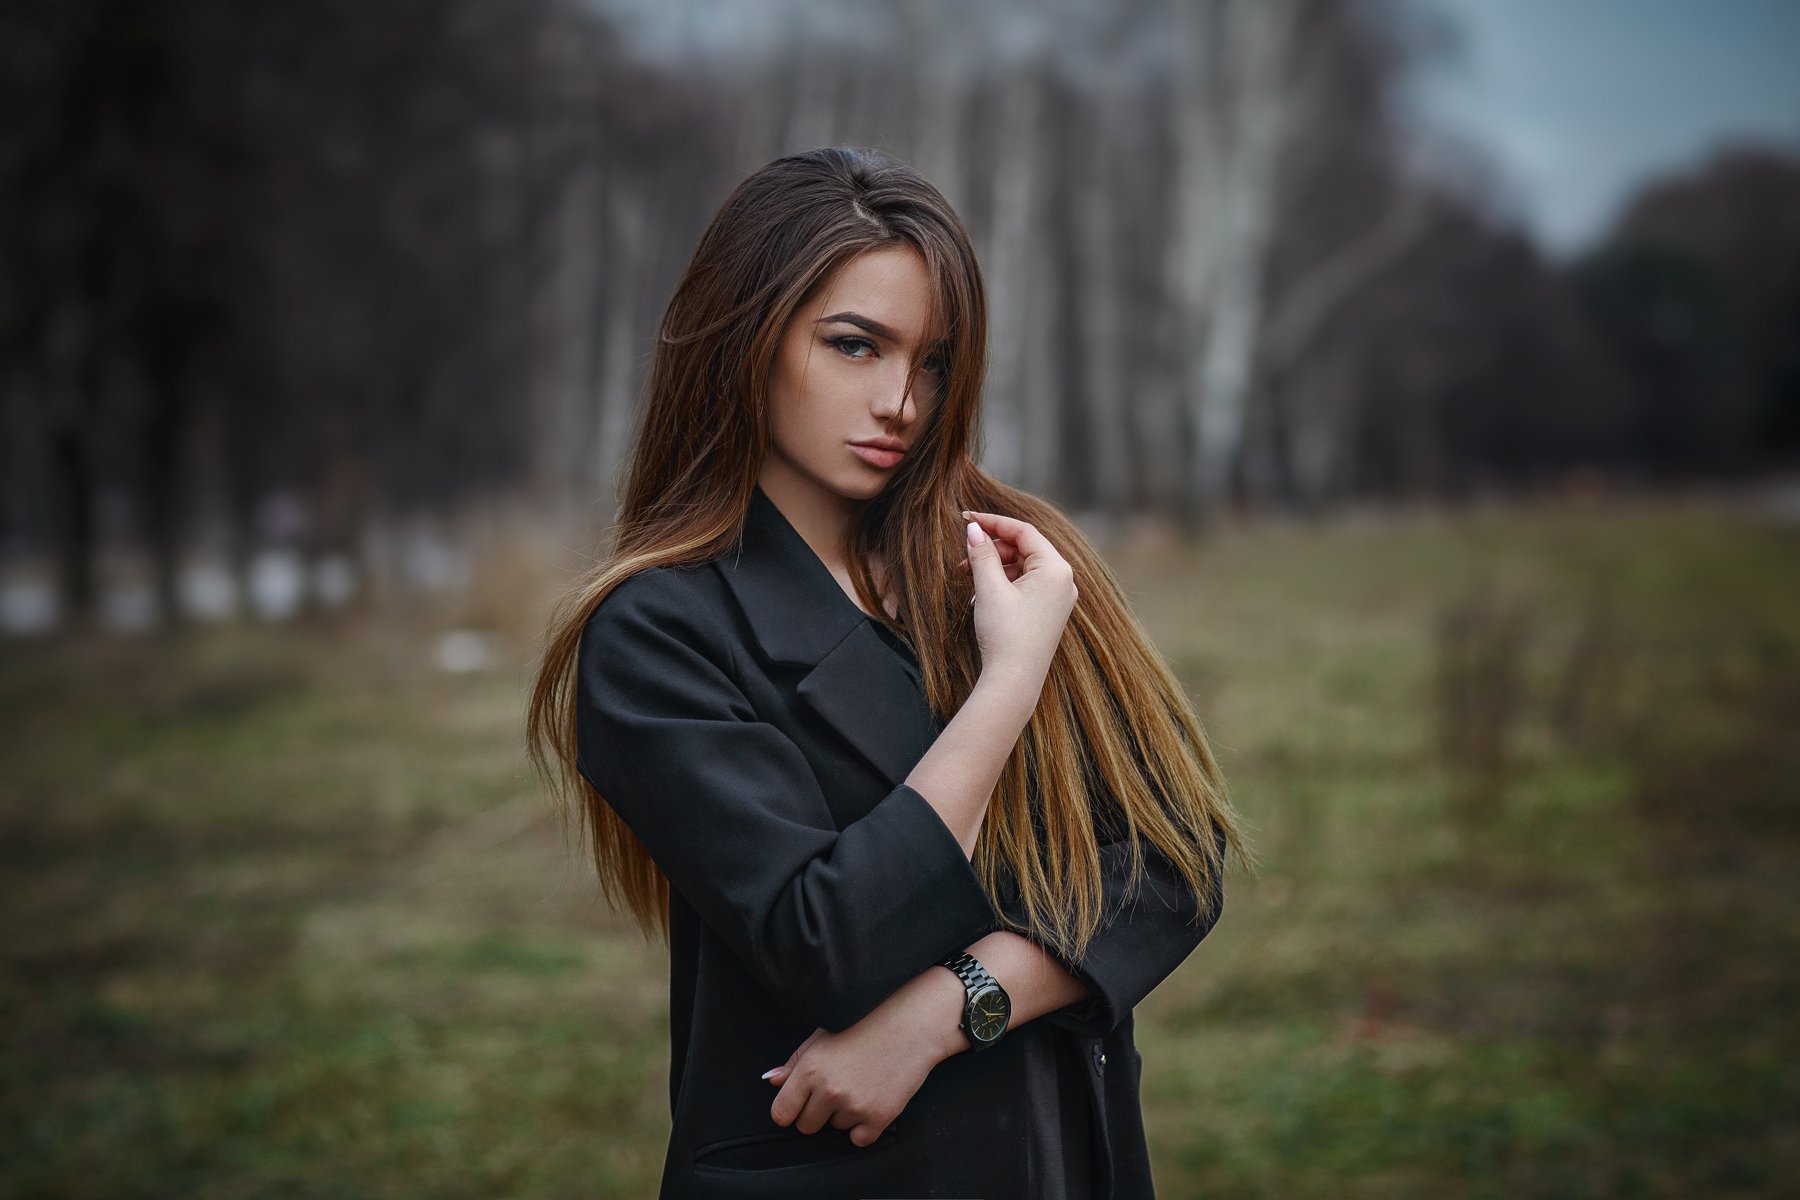 #portrait #beautiful #model #russia #moscow # #canon #sigma #natural #light #портретарт #модель #portrait #art, Hakan Erenler